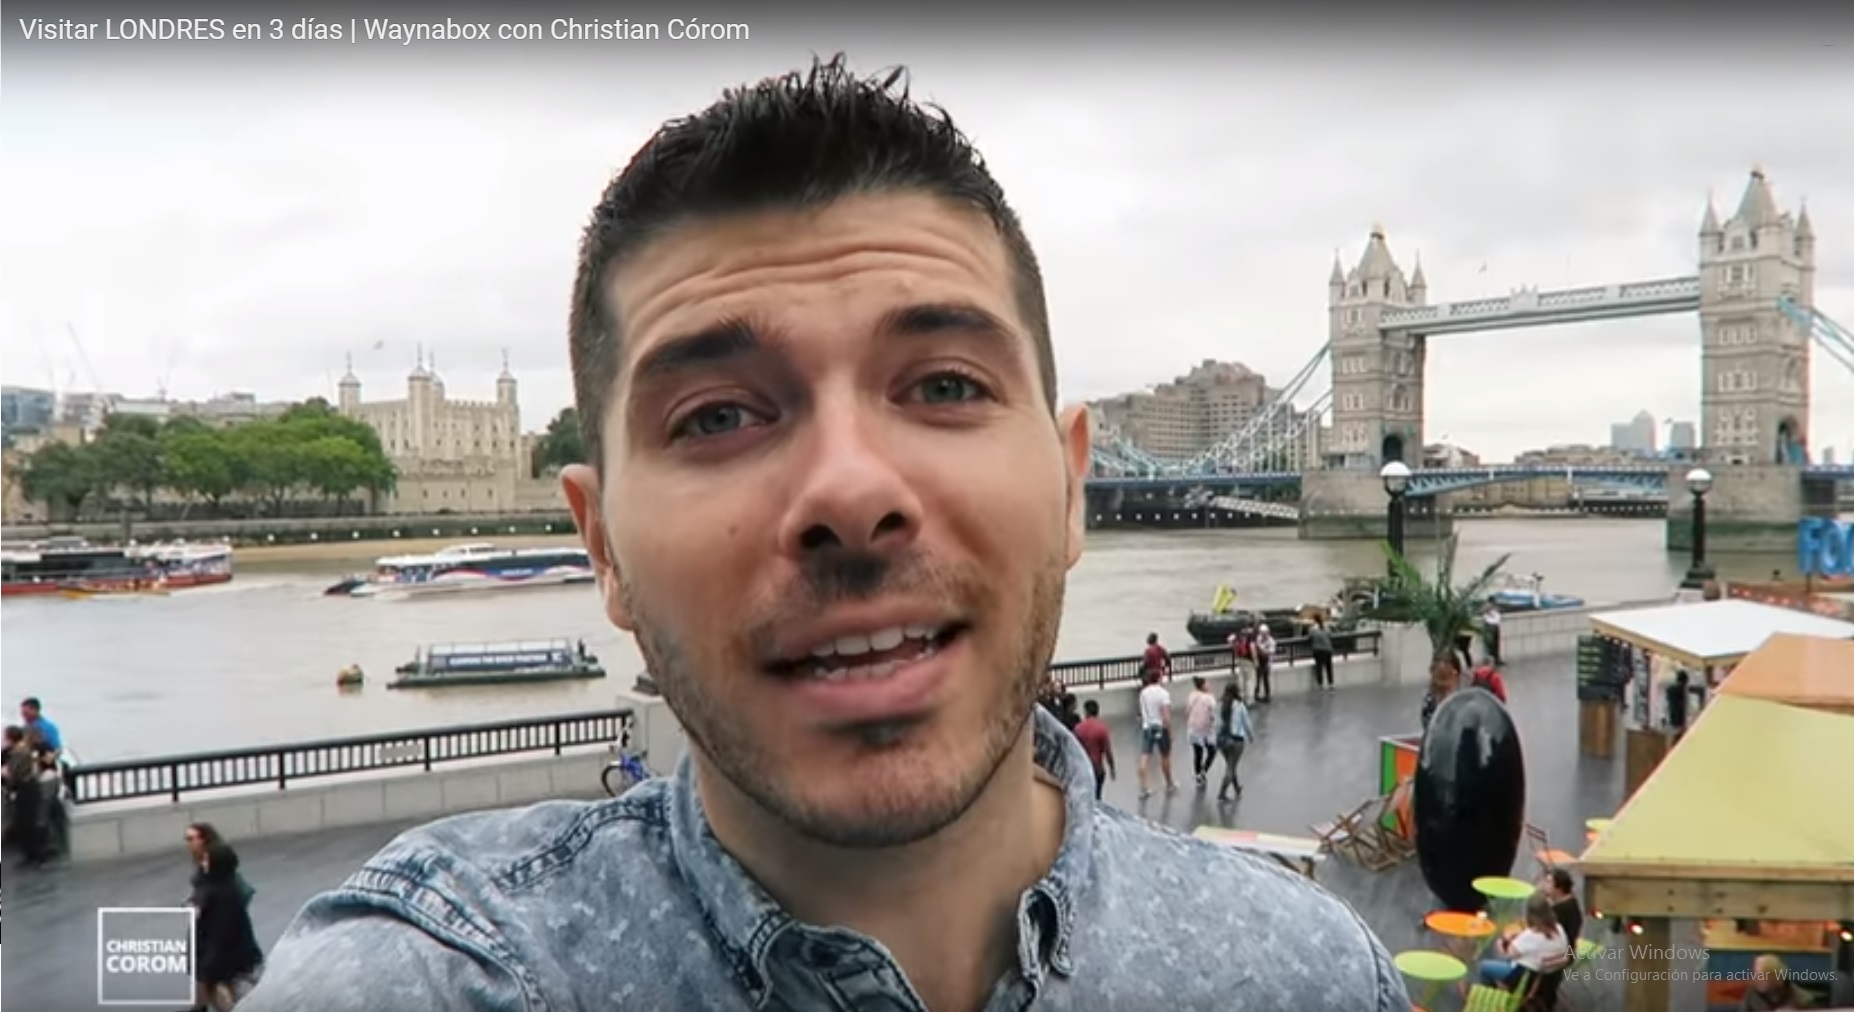 El viaje Waynabox del youtuber de viajes Christian Córom en Londres